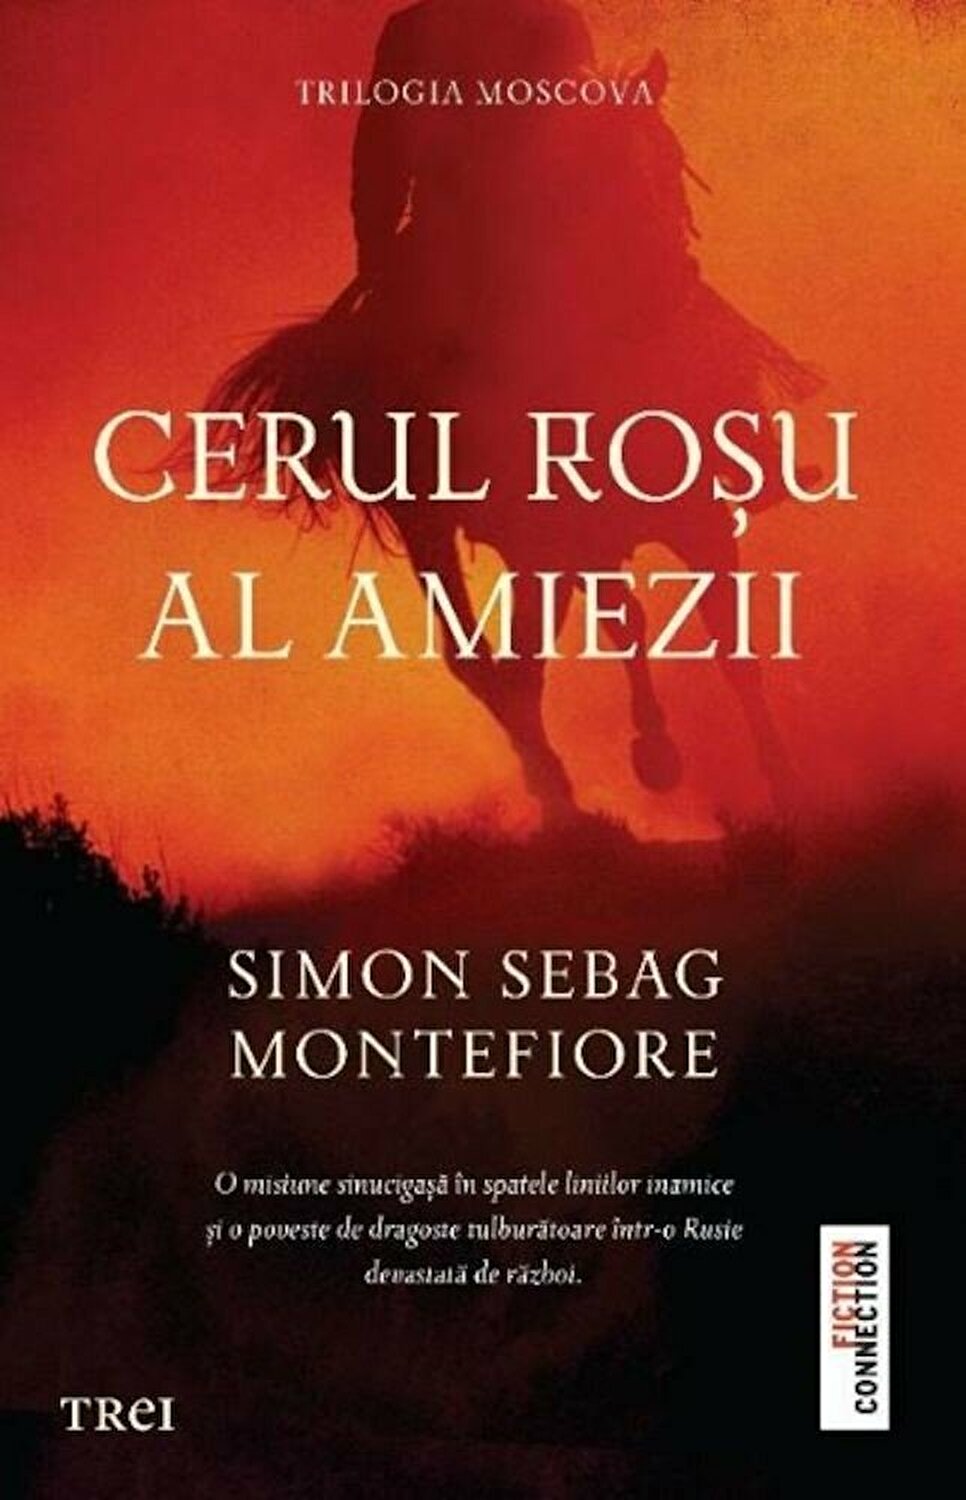 Cerul rosu al amiezii | Simon Sebag Montefiore carturesti.ro poza bestsellers.ro